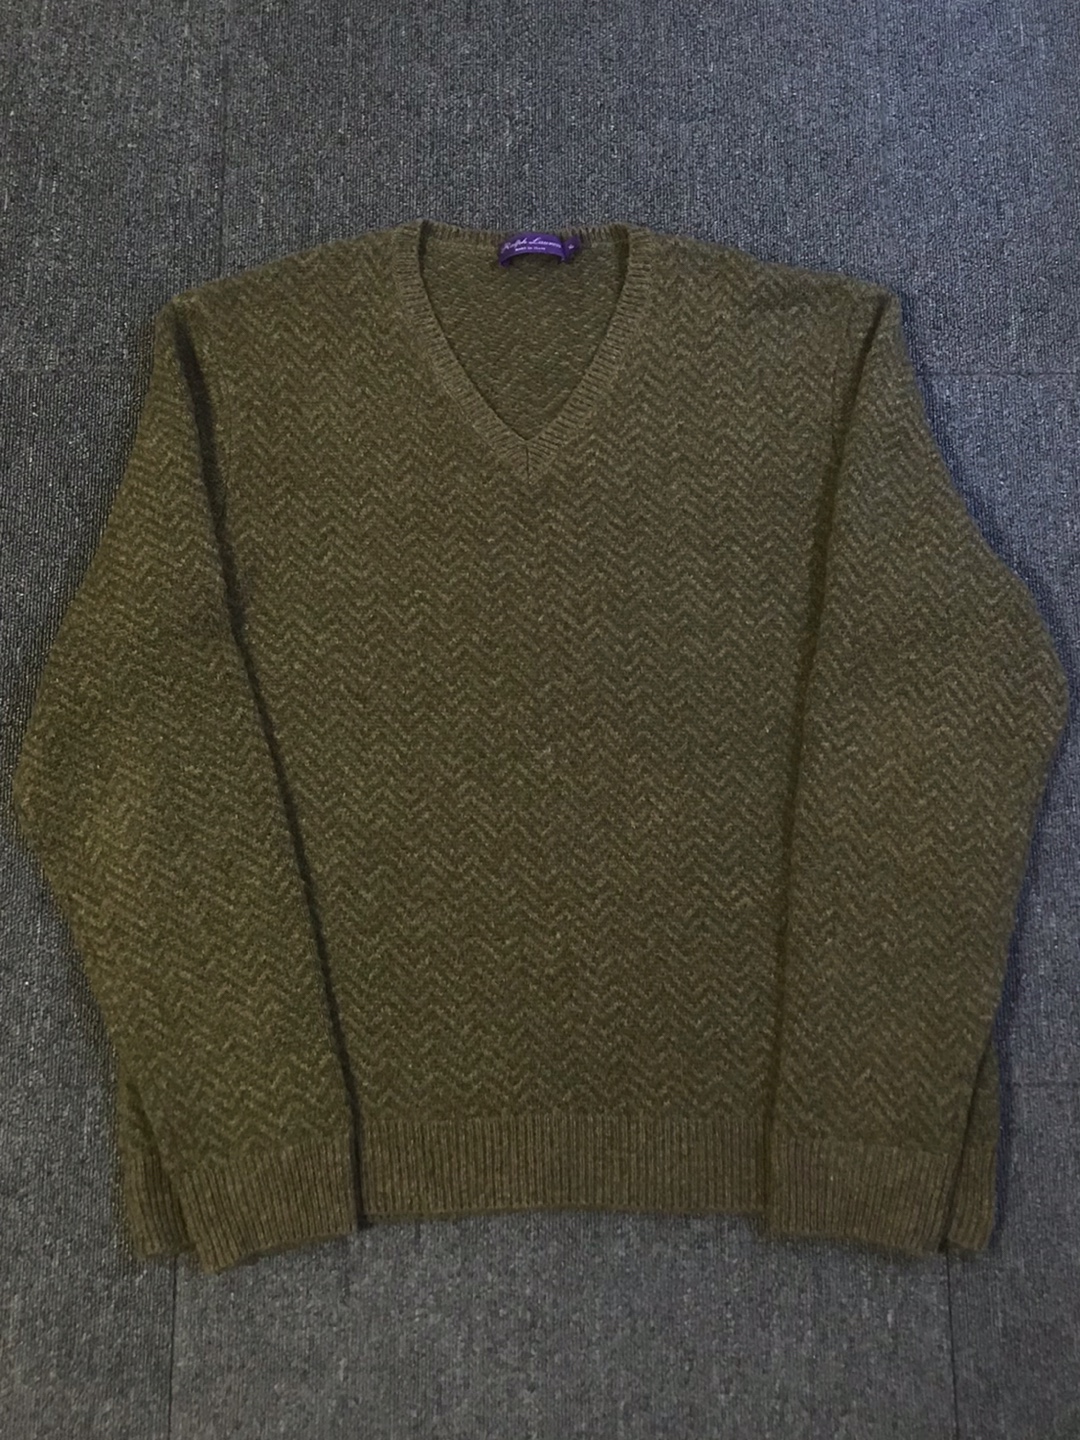 RL purple label herringbone cashmere v neck sweater Italy made (XL size, 103~ 추천)